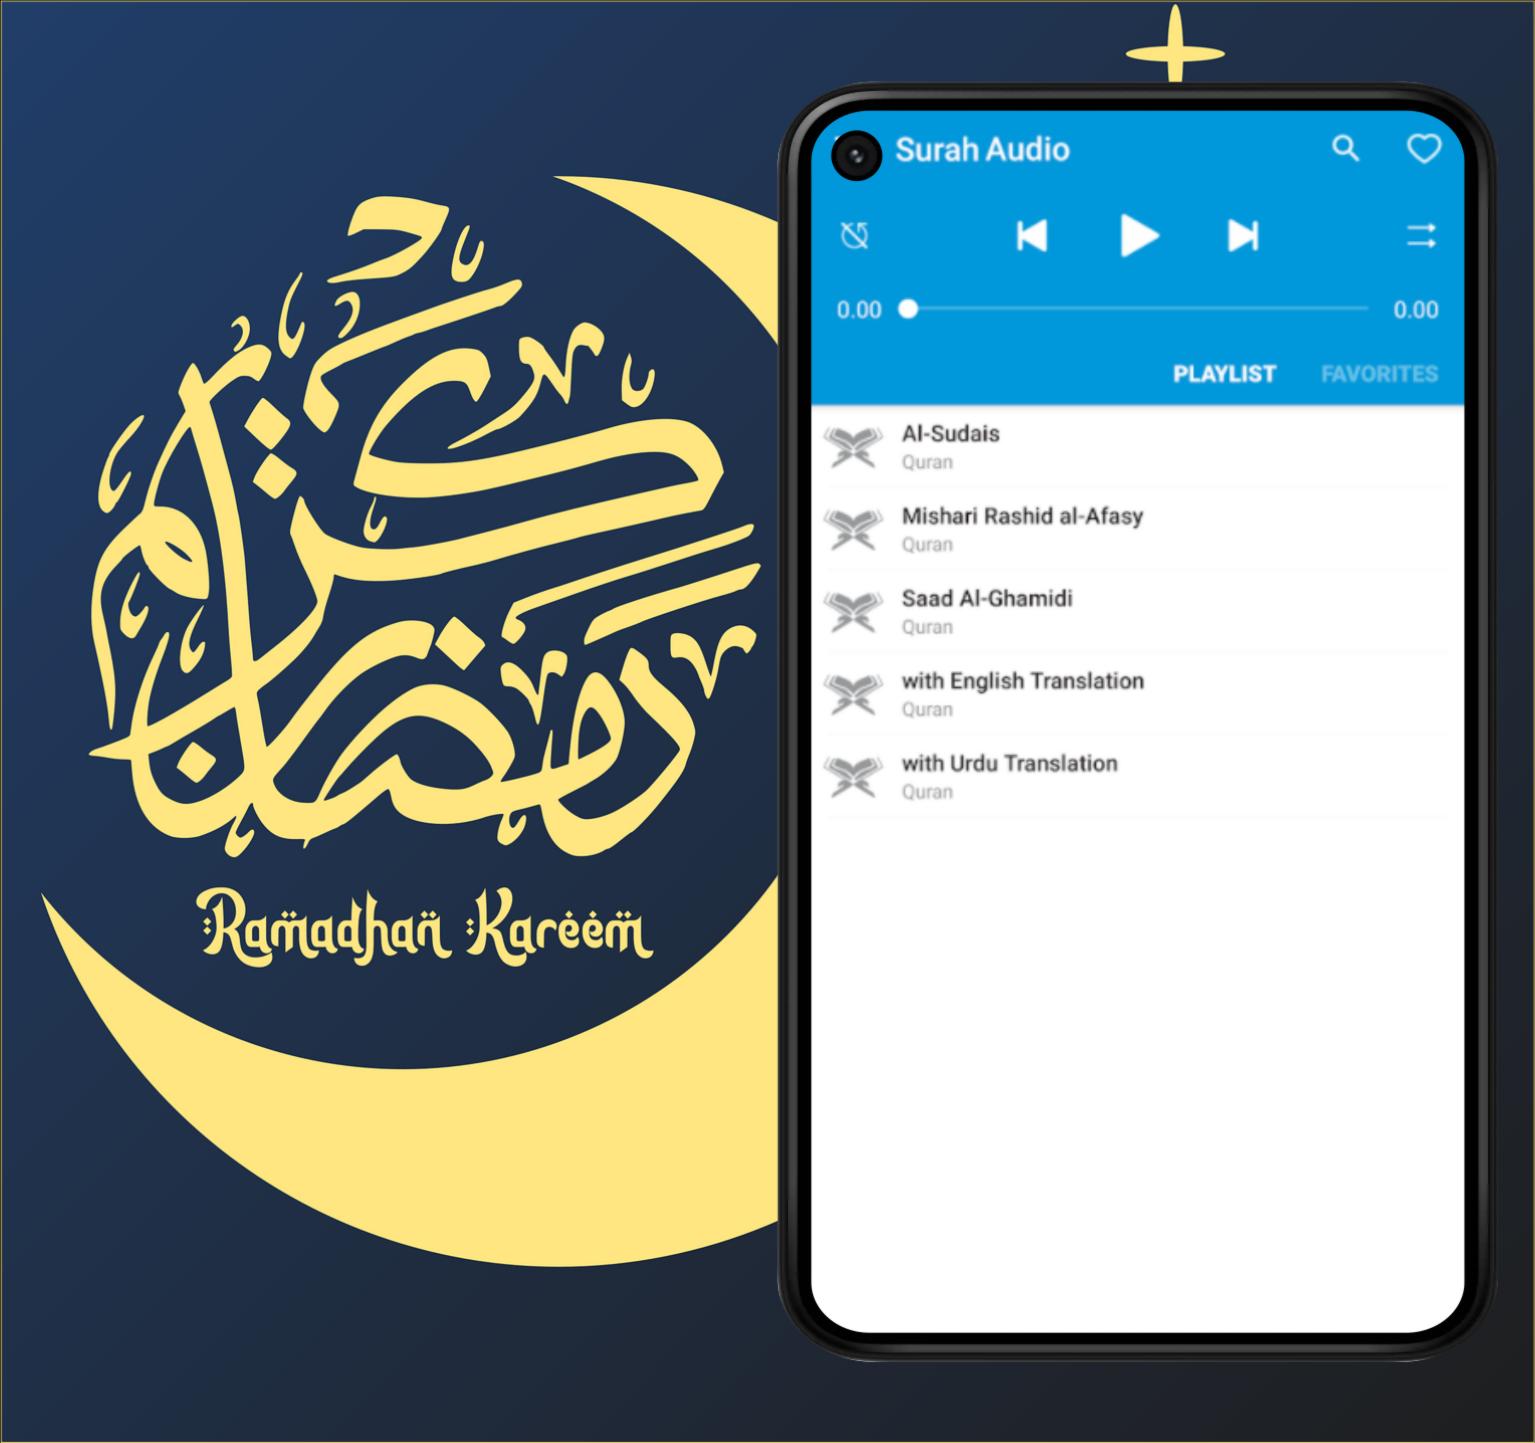 Ayatul Kursi MP3 Offline APK pour Android Télécharger